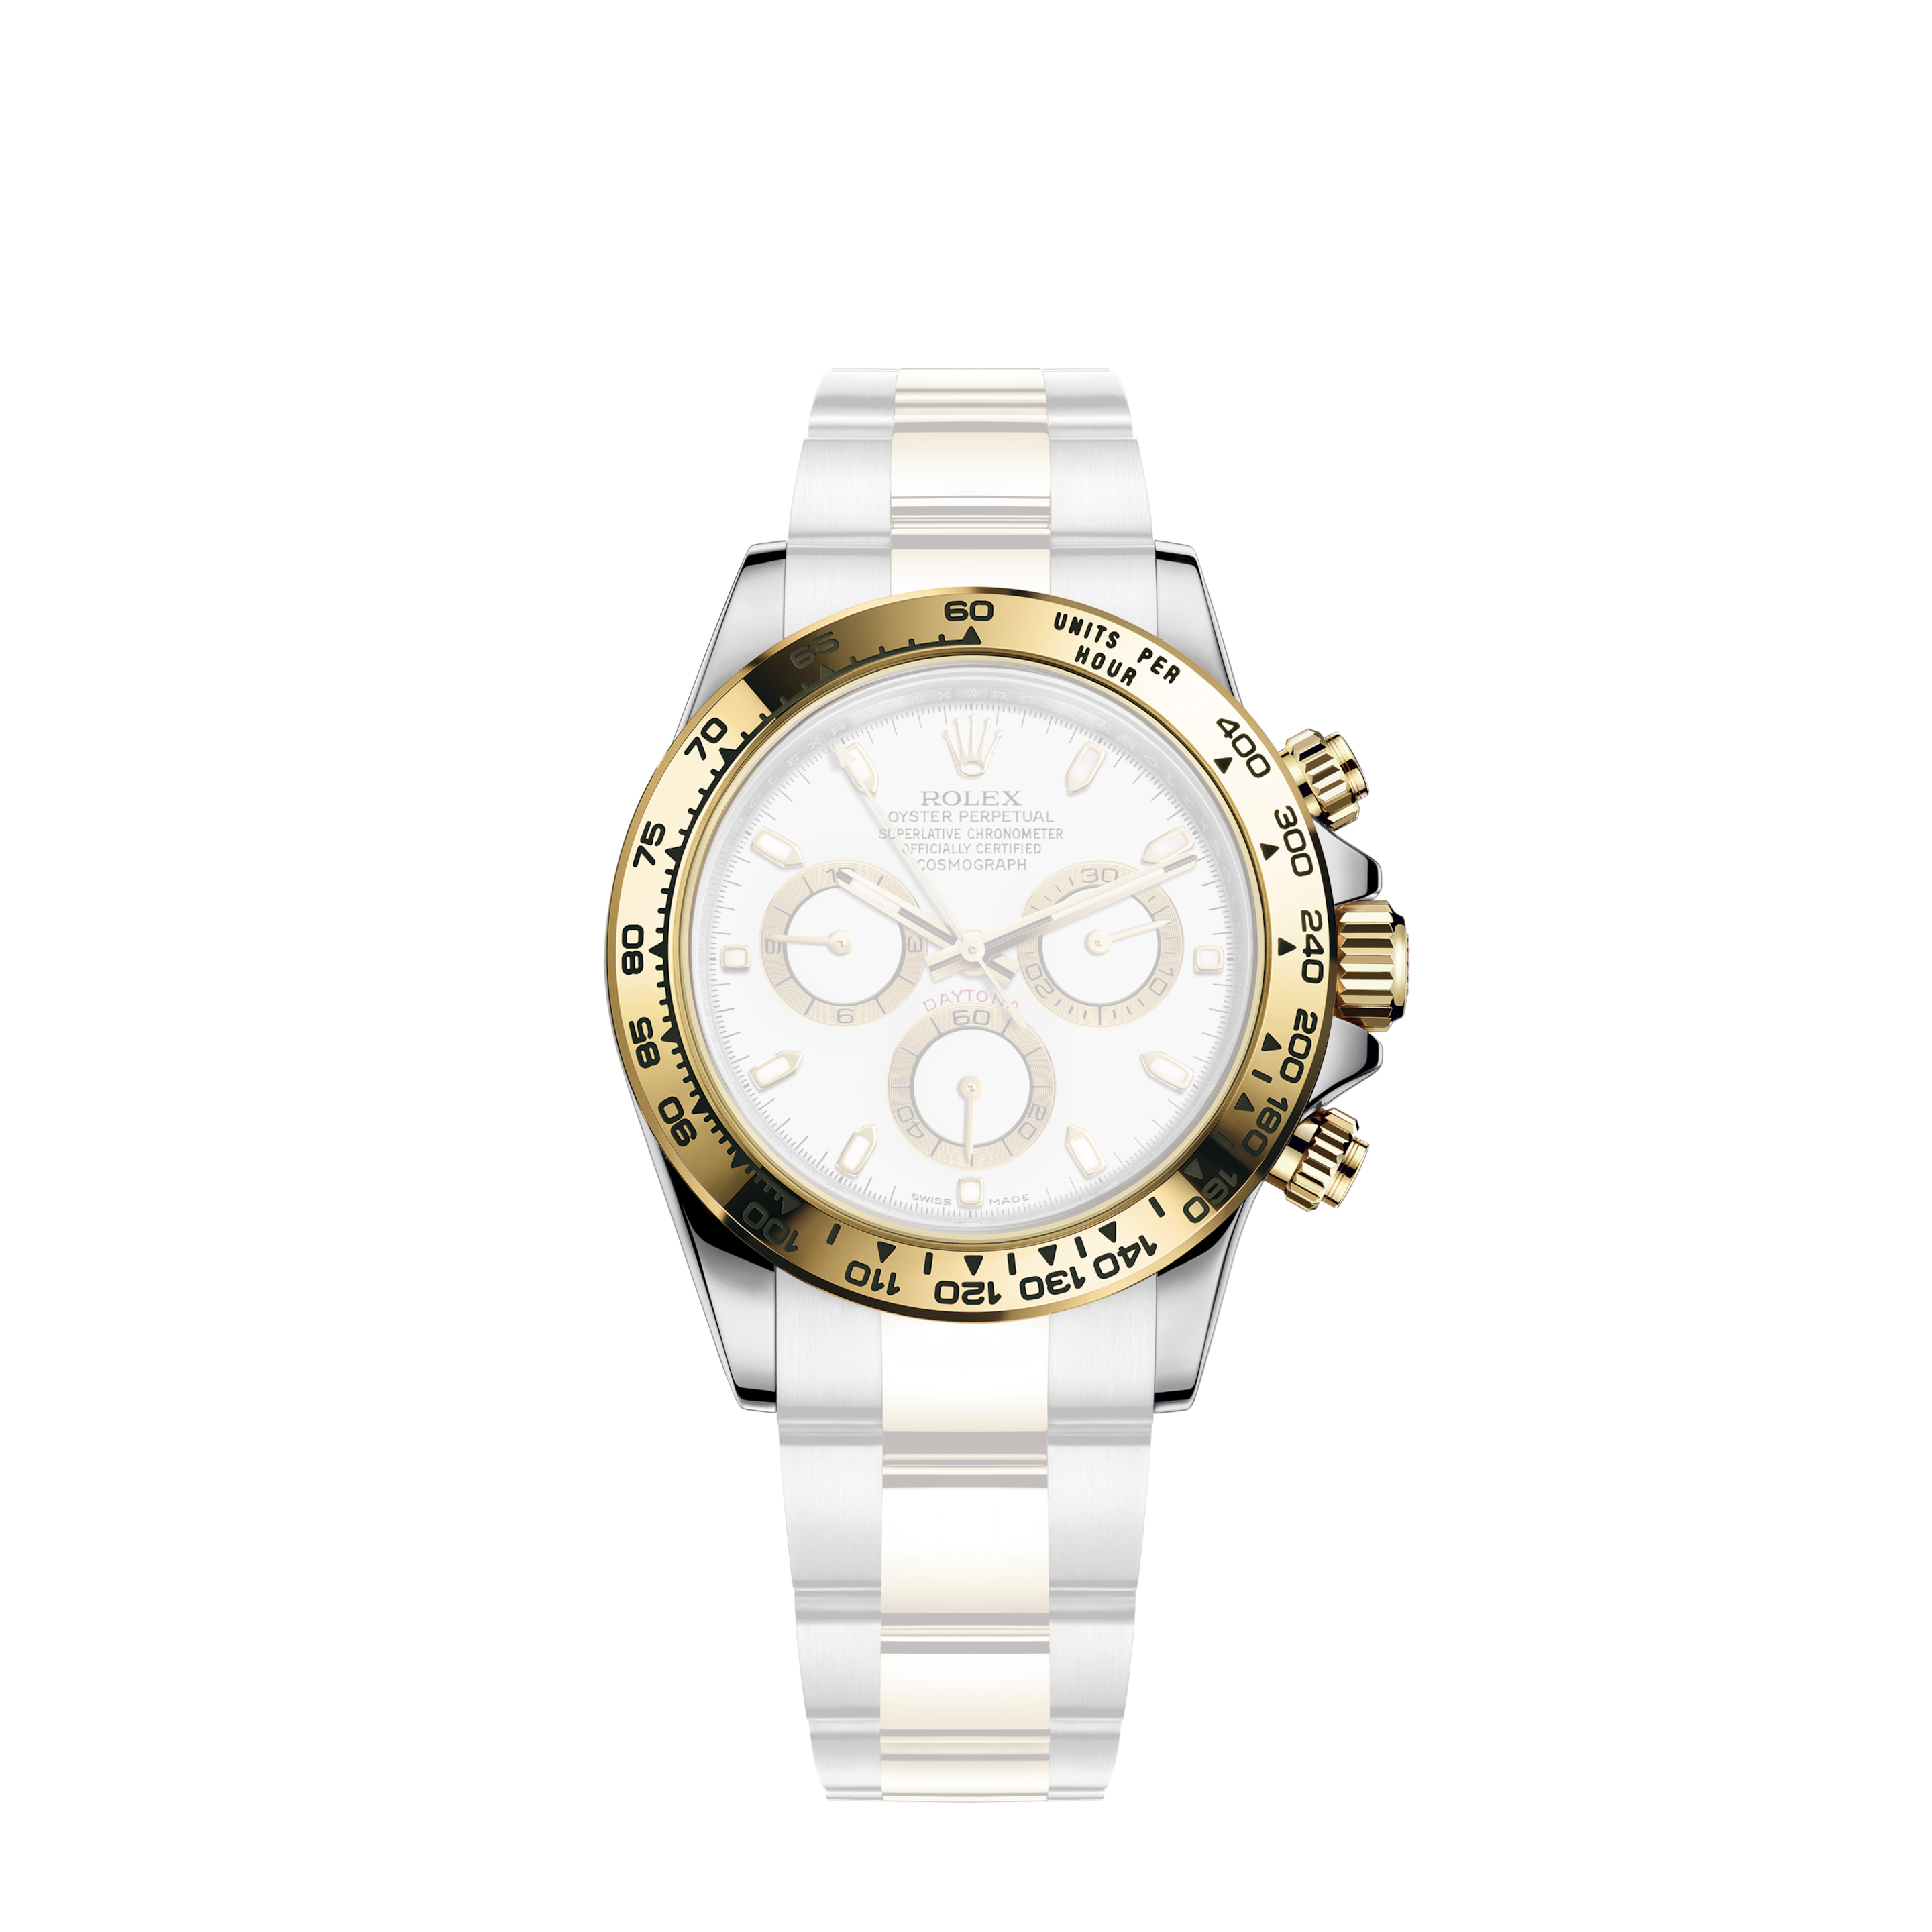 Rolex Cosmograph Daytona 18ct Yellow Gold Automatic Black Dial Men's Watch - 116518LN